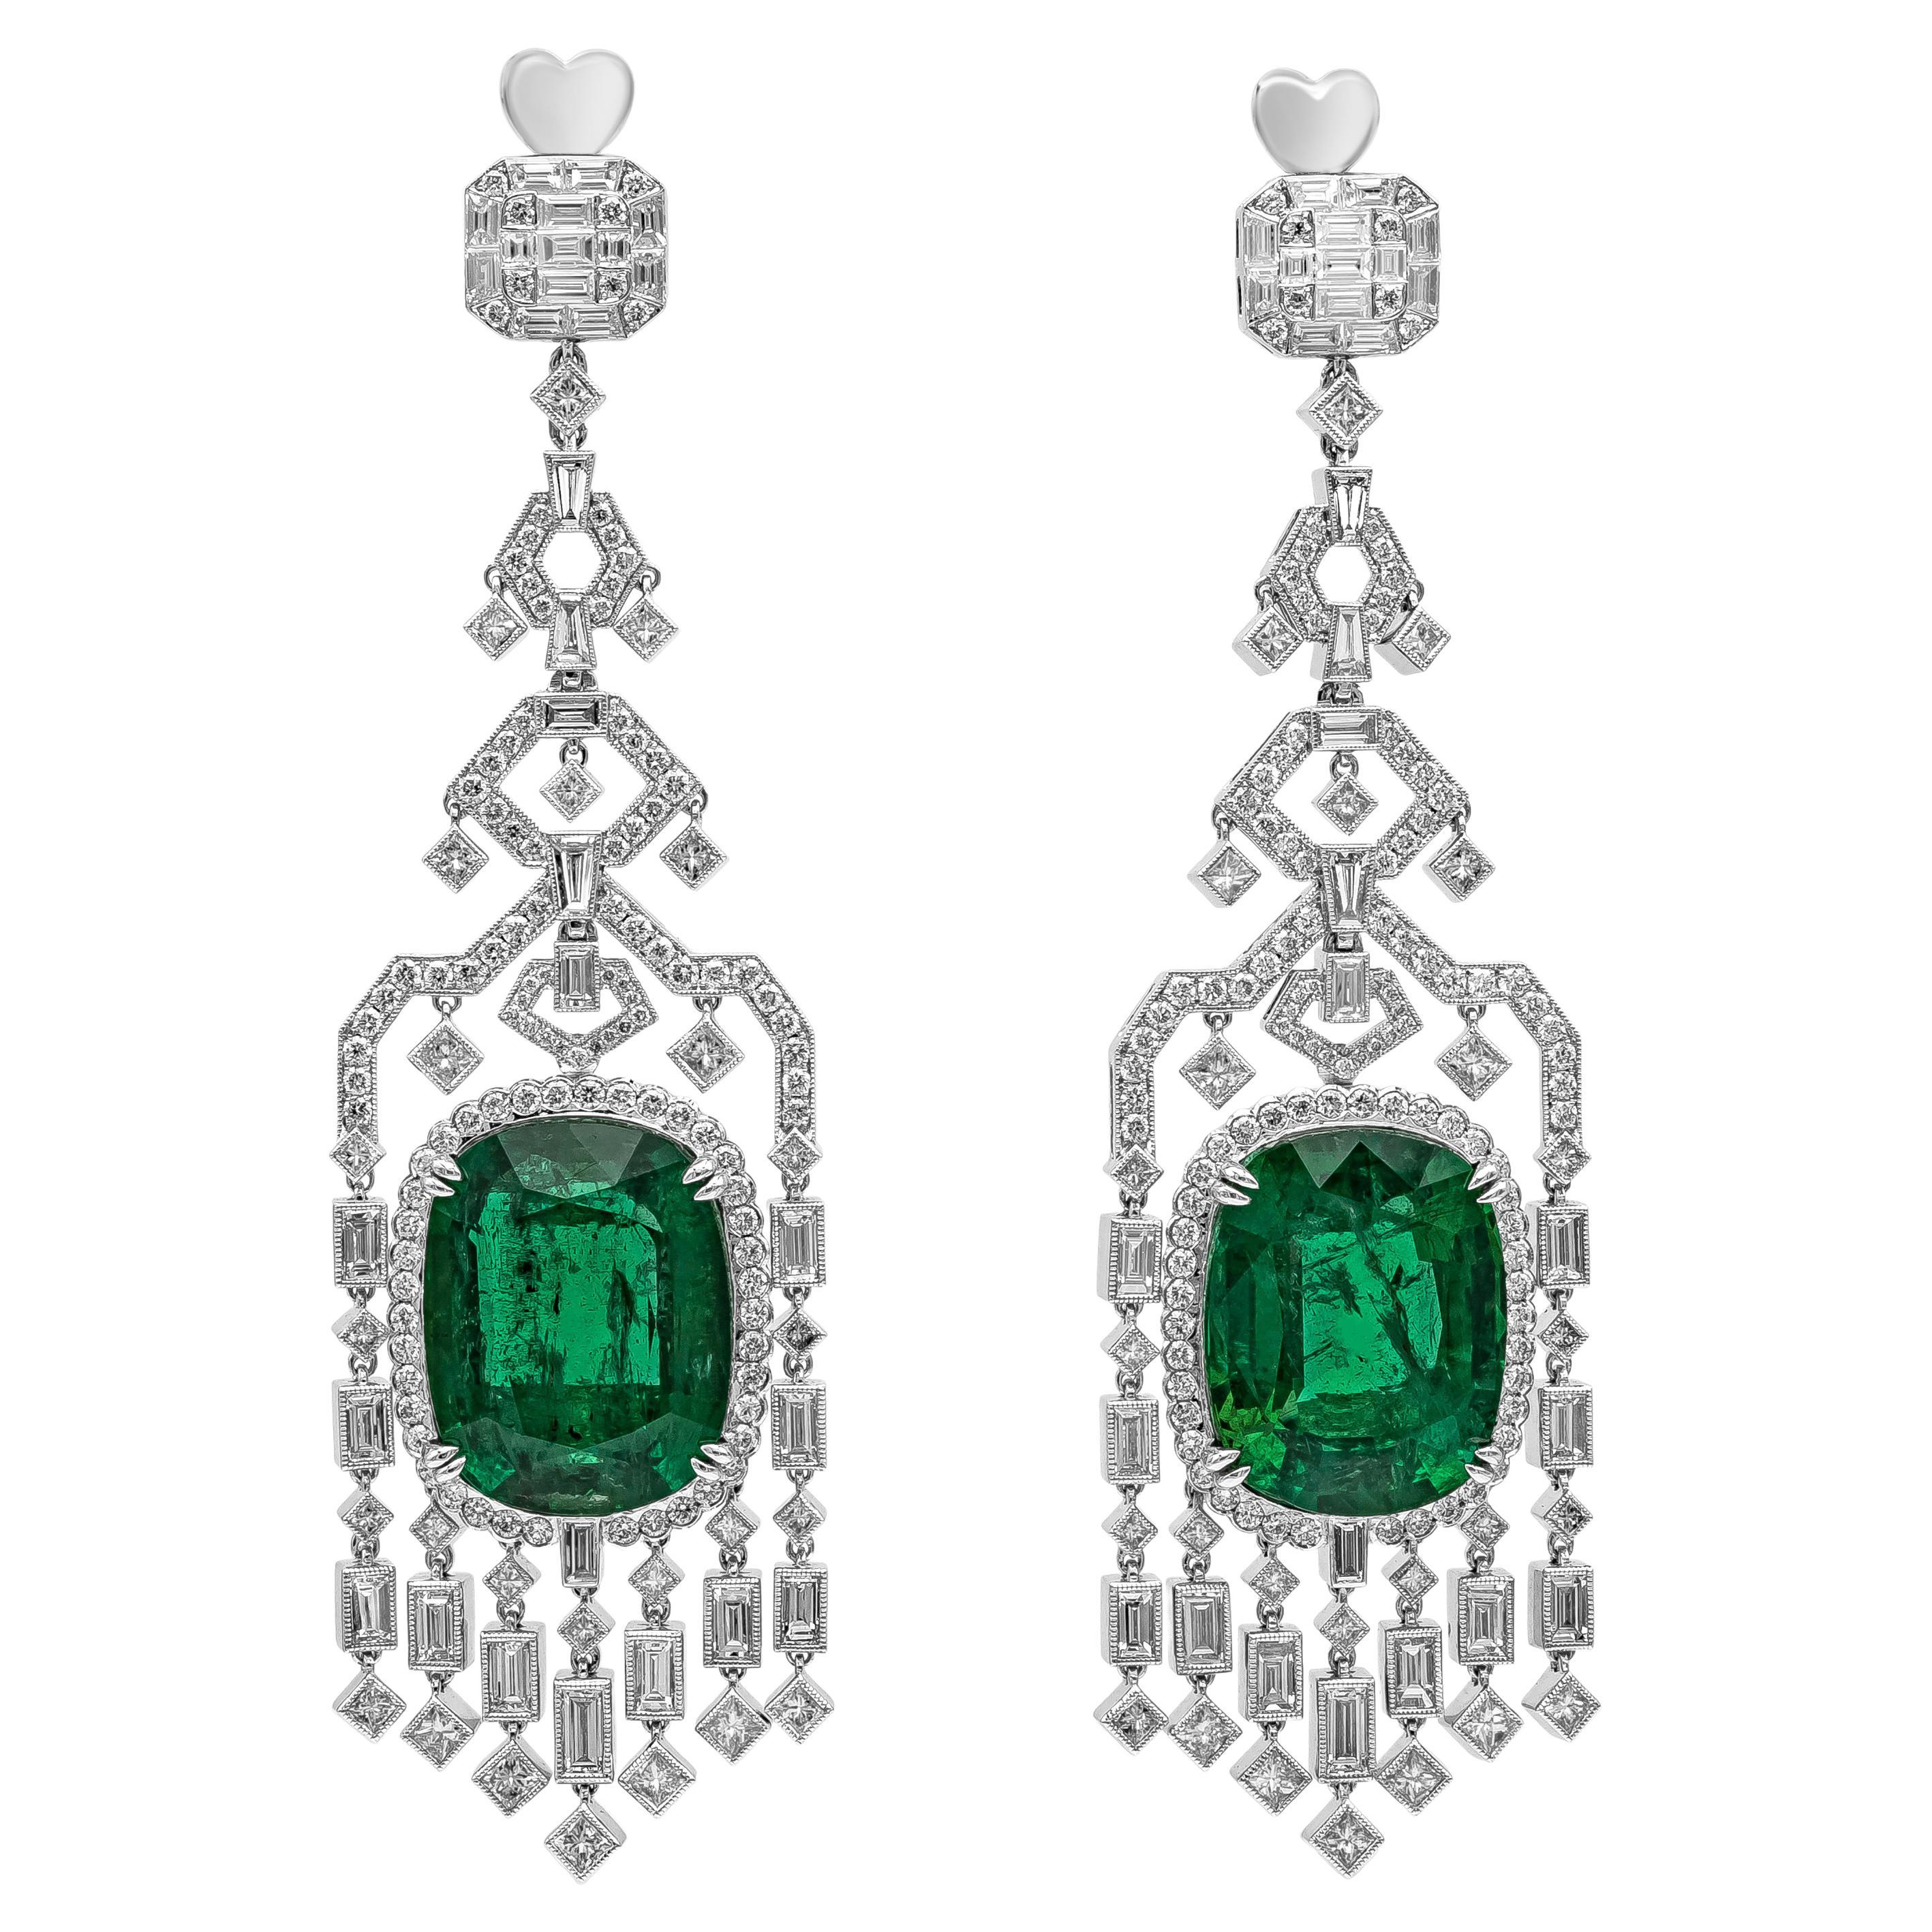 Roman Malakov, 45.76 Carat Emerald and Diamond Chandelier Earrings